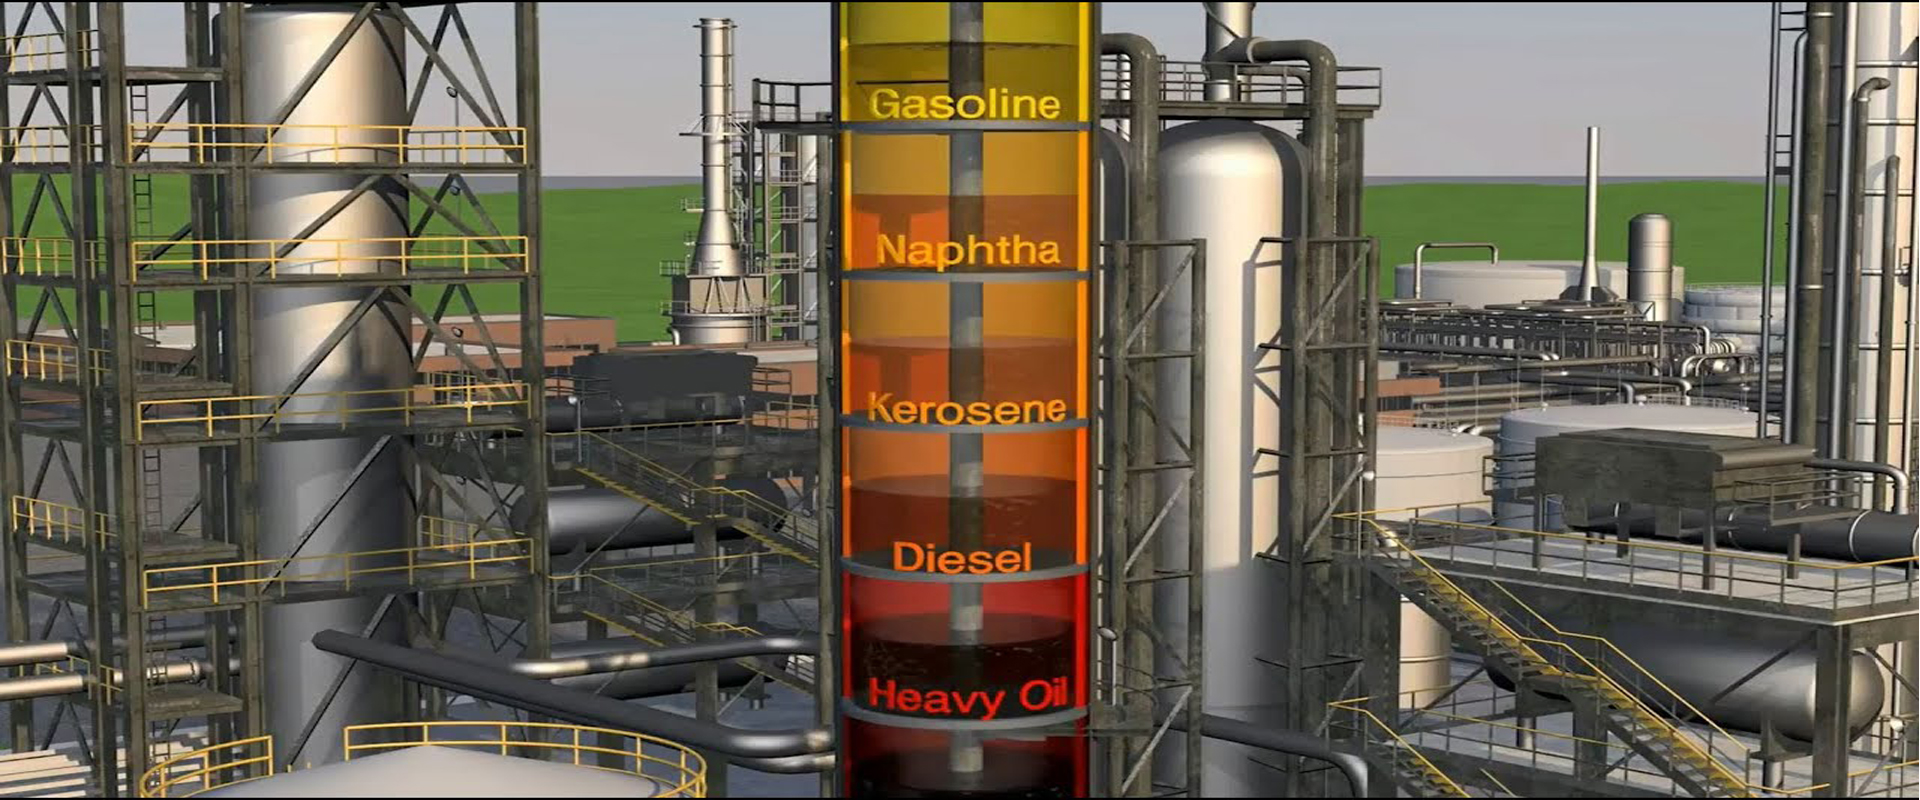 Industry oil filtration